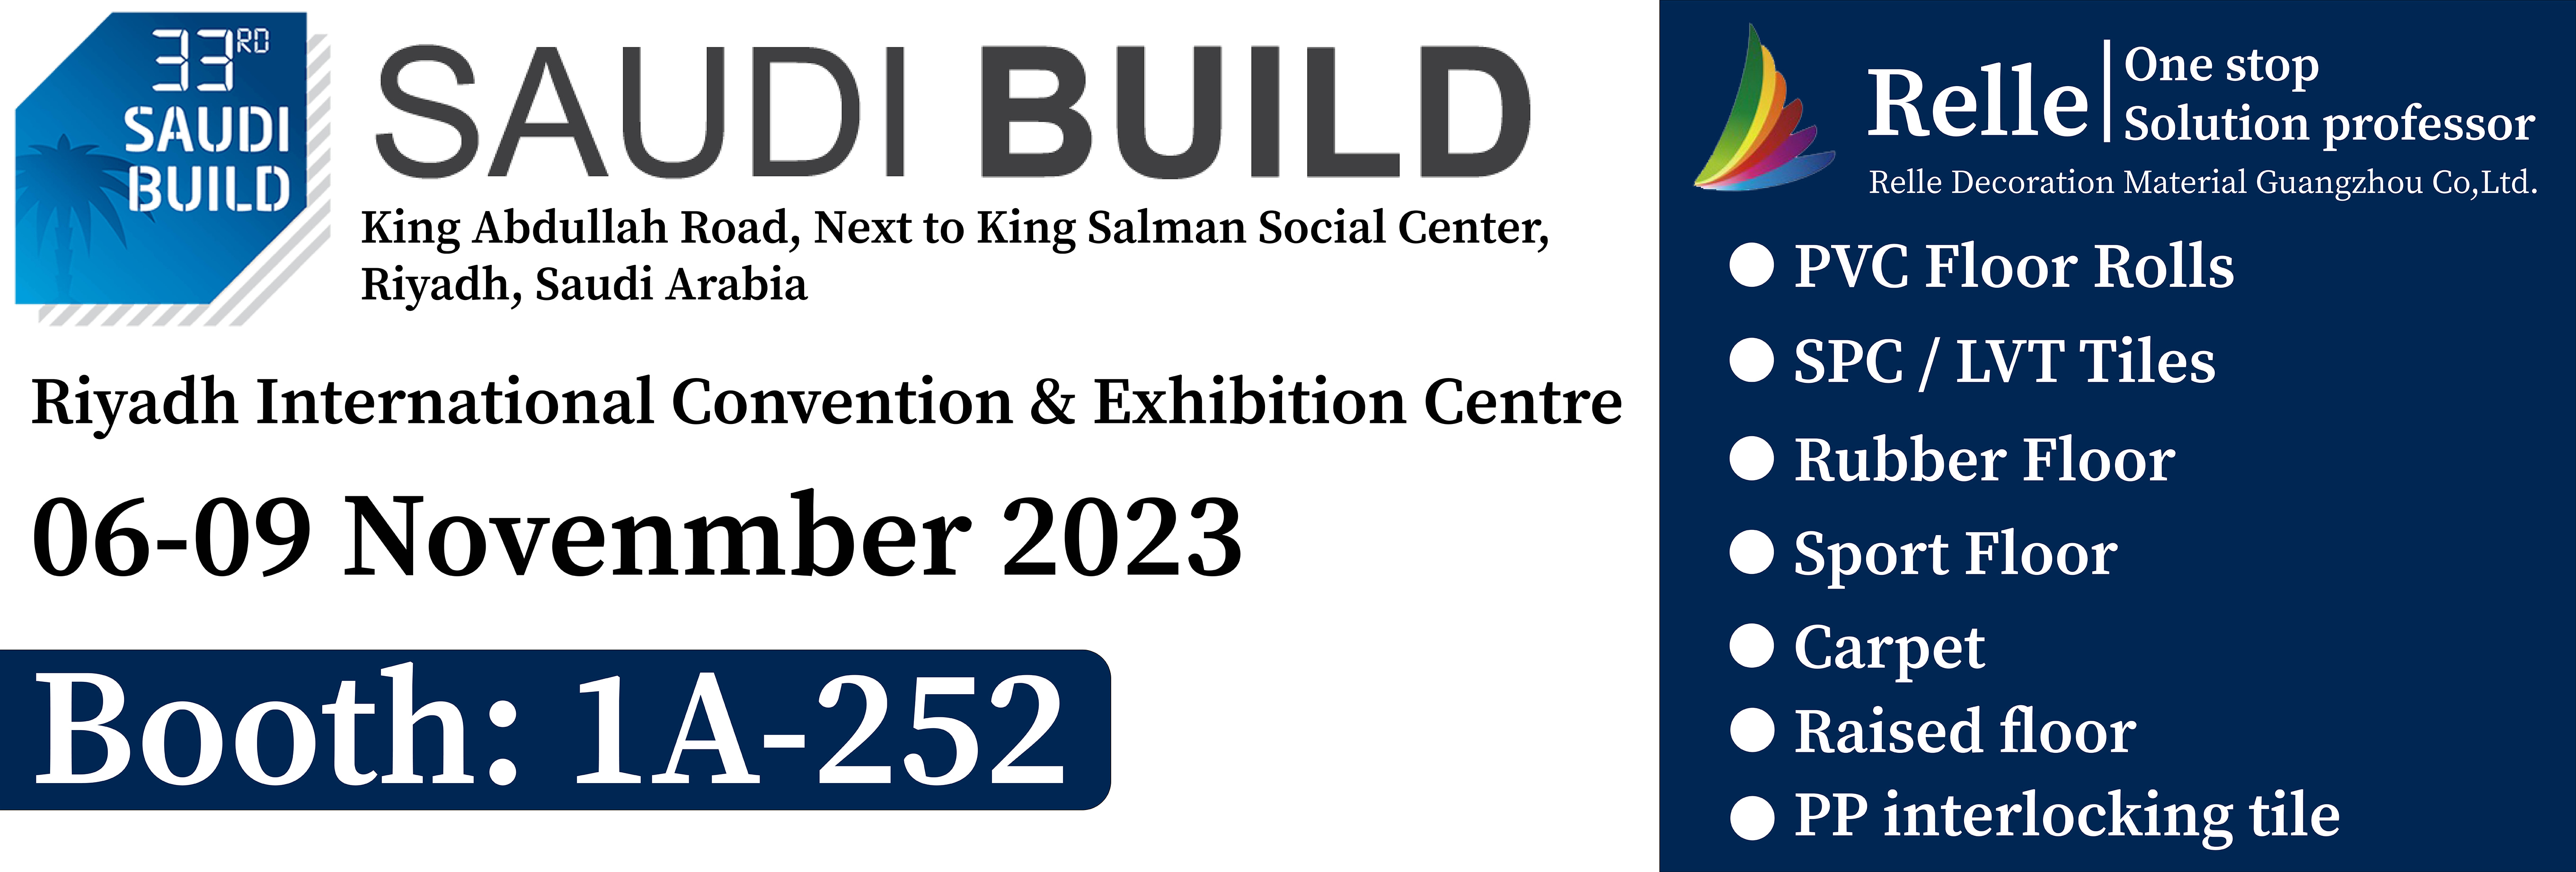 Riyadh International Convention & Exhibition Centre & SAUDI BUILD